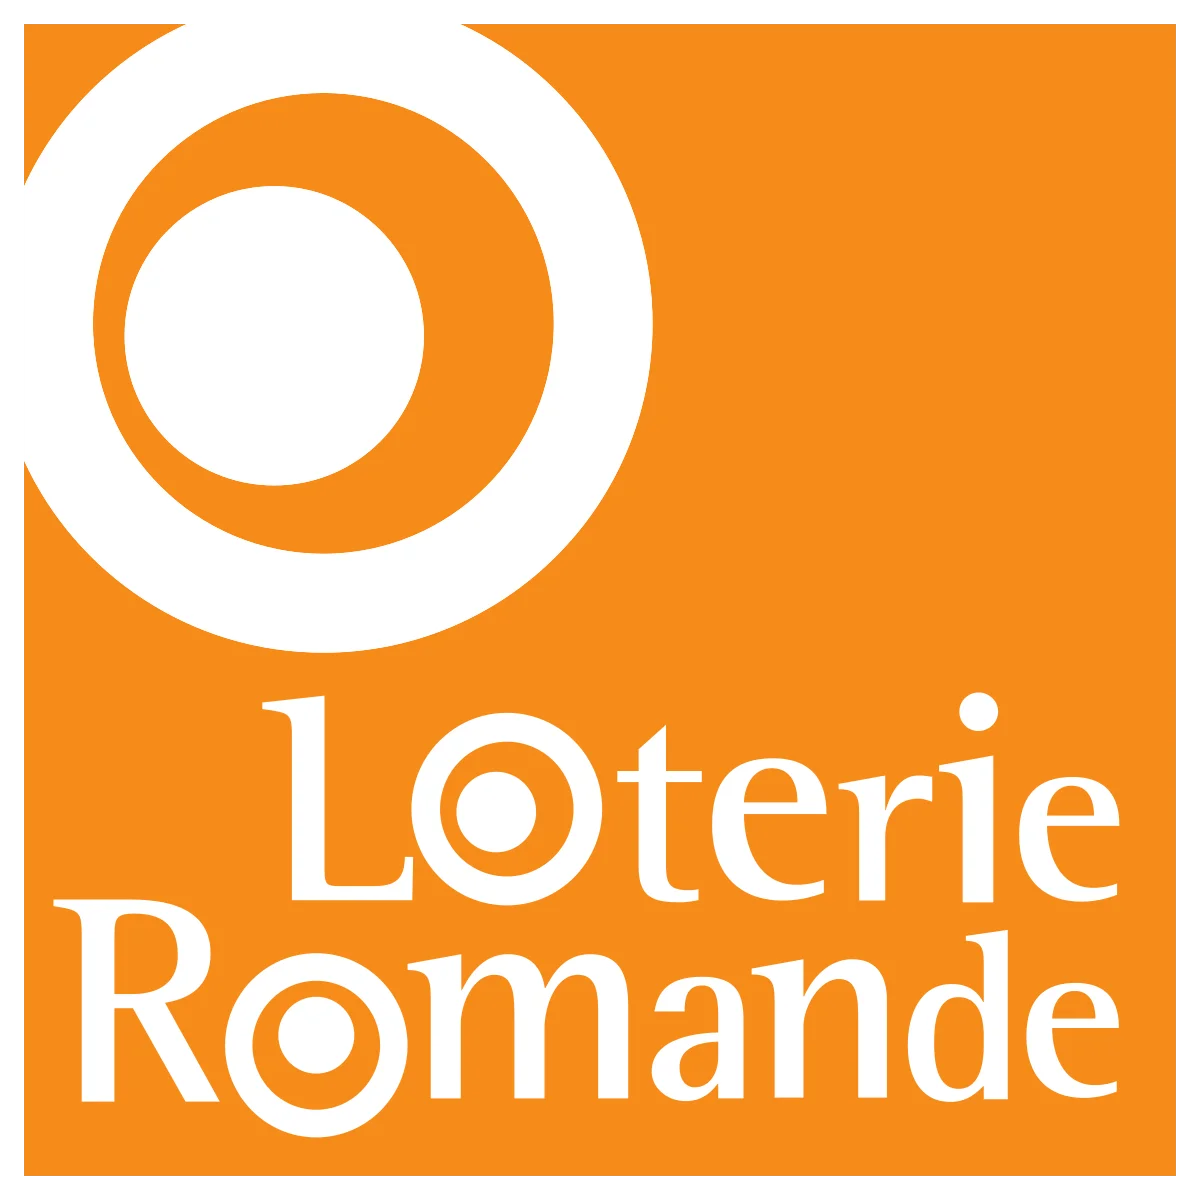 Loterie Romande from Switzerland